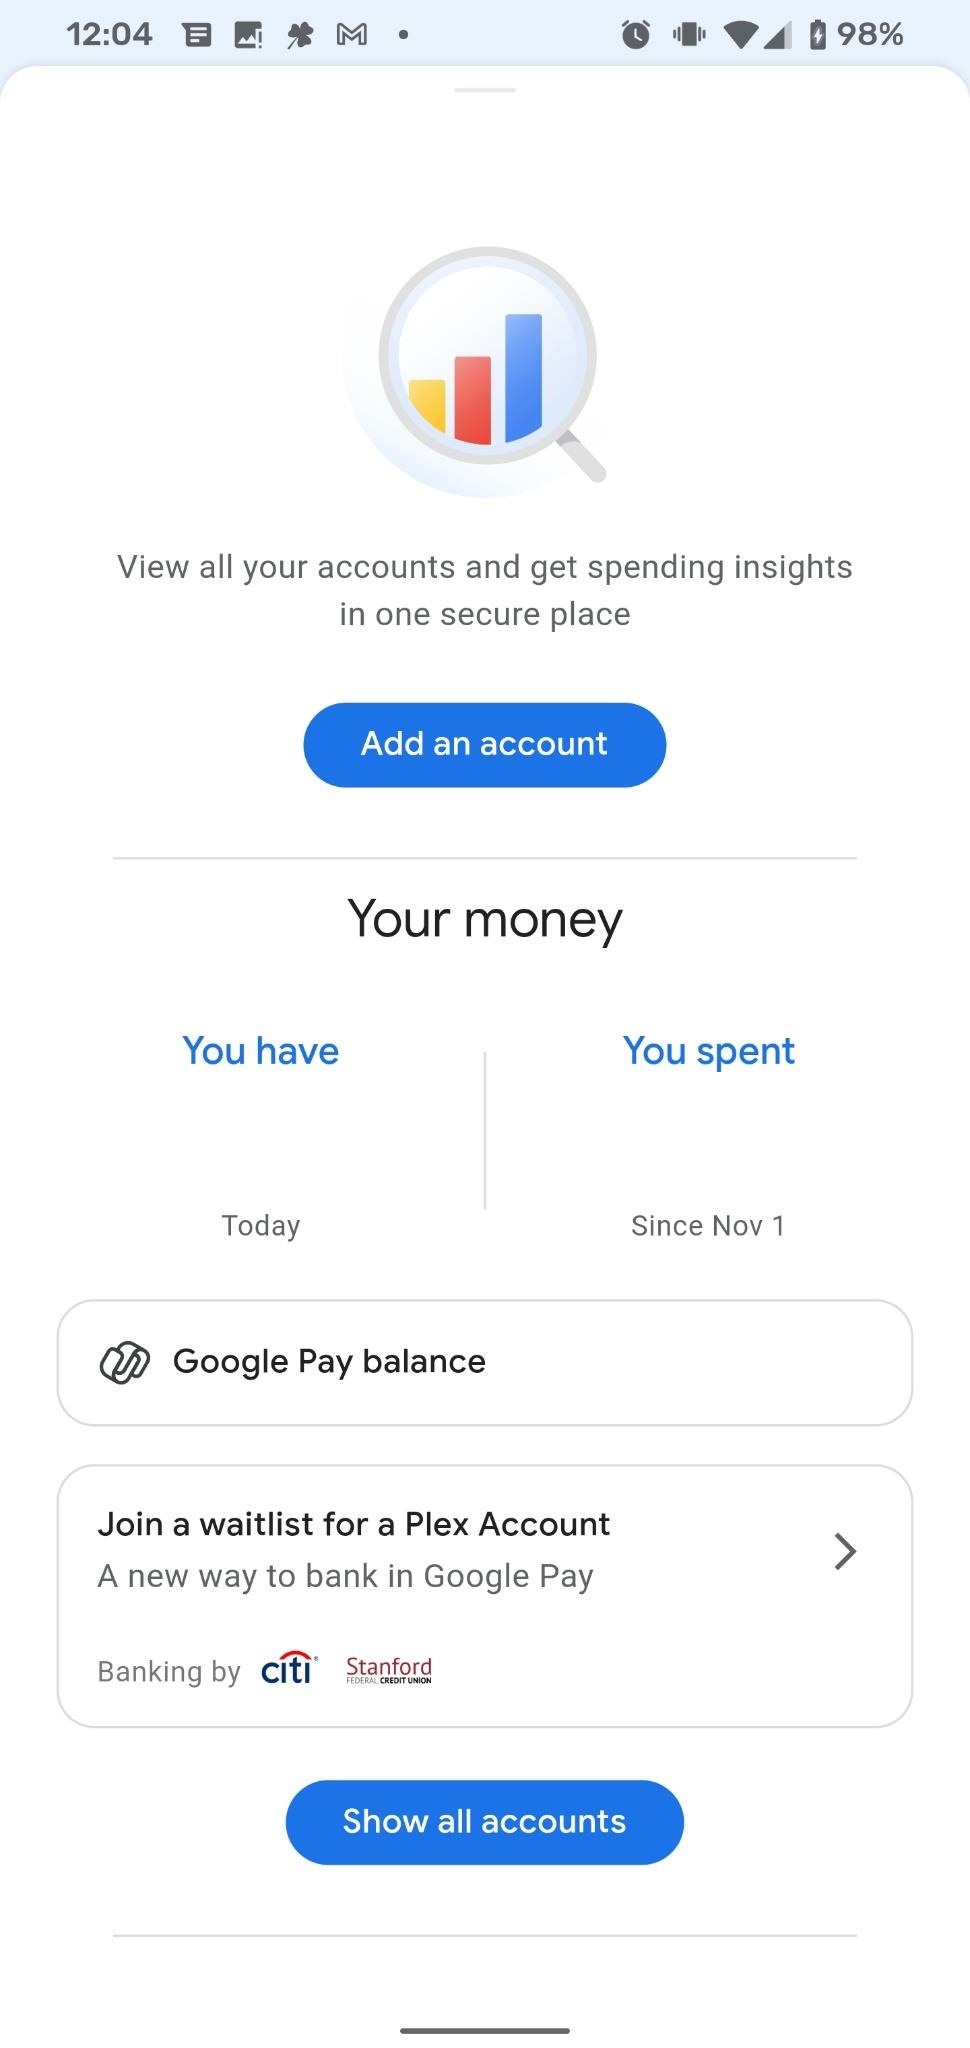 How to Pre-Register for a Plex Account Through the New Google Pay App